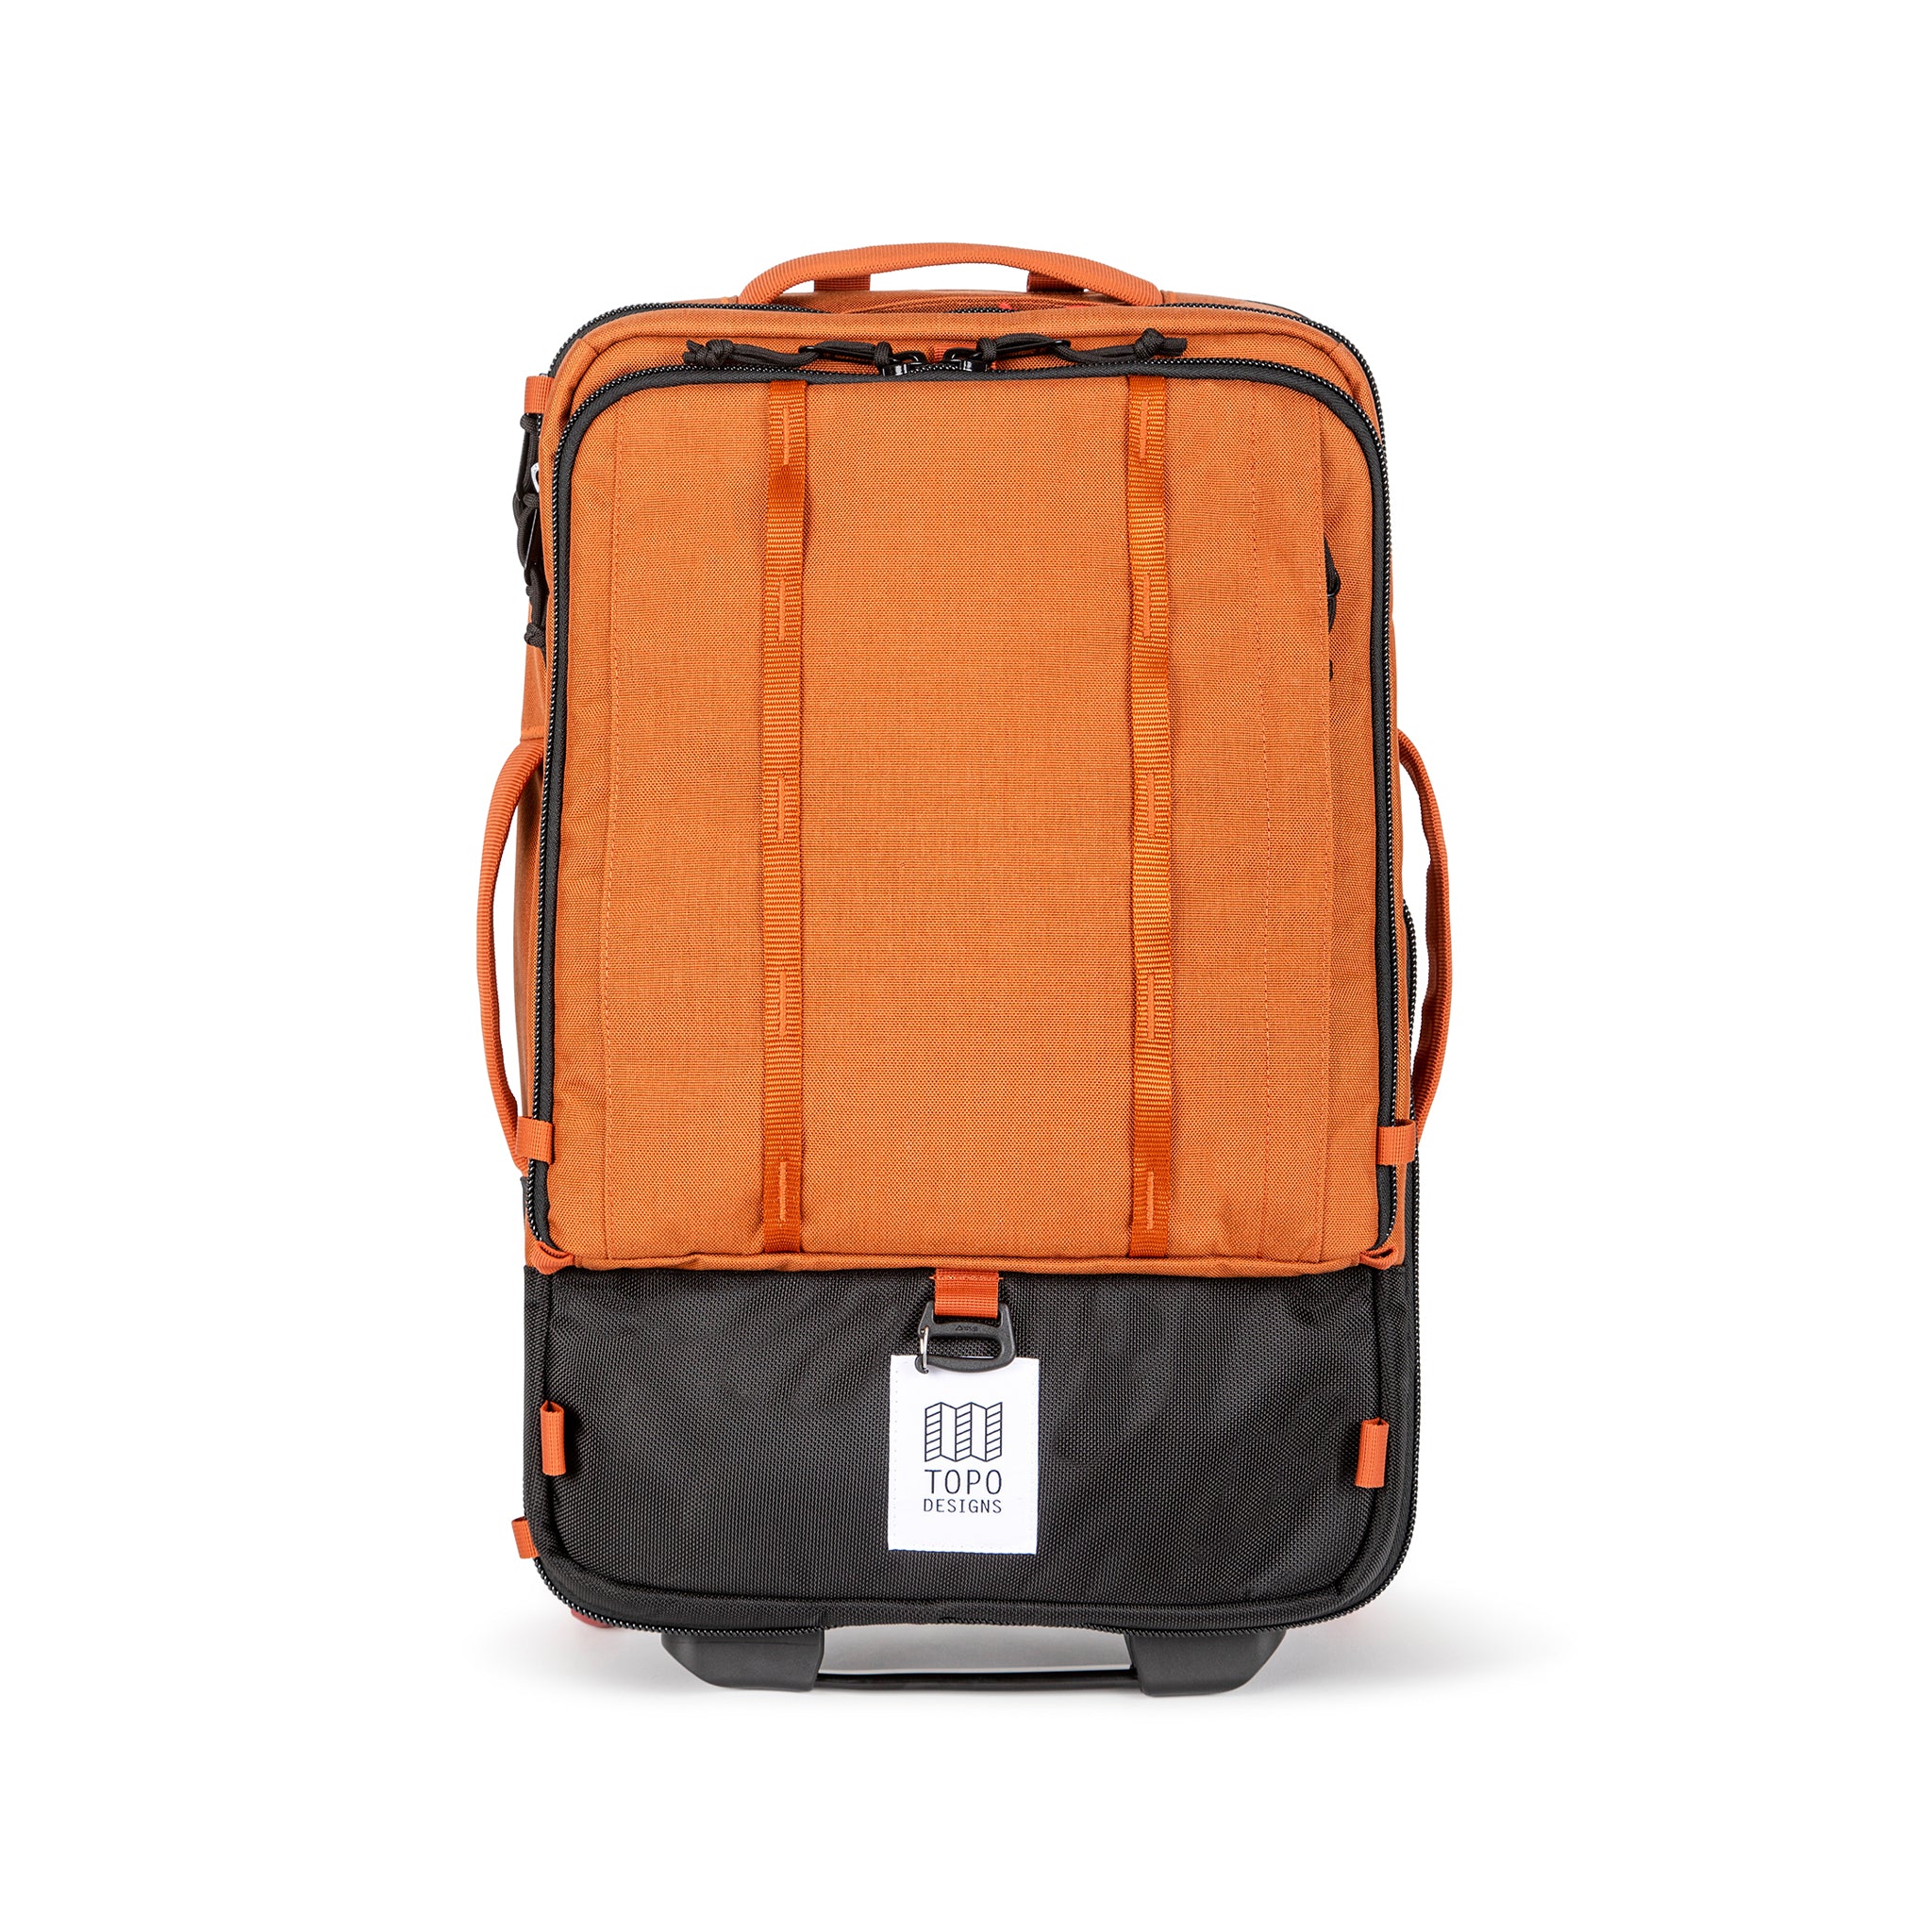 Topo Designs Global Travel Bag Roller Desert Palm/Pond Blue, built